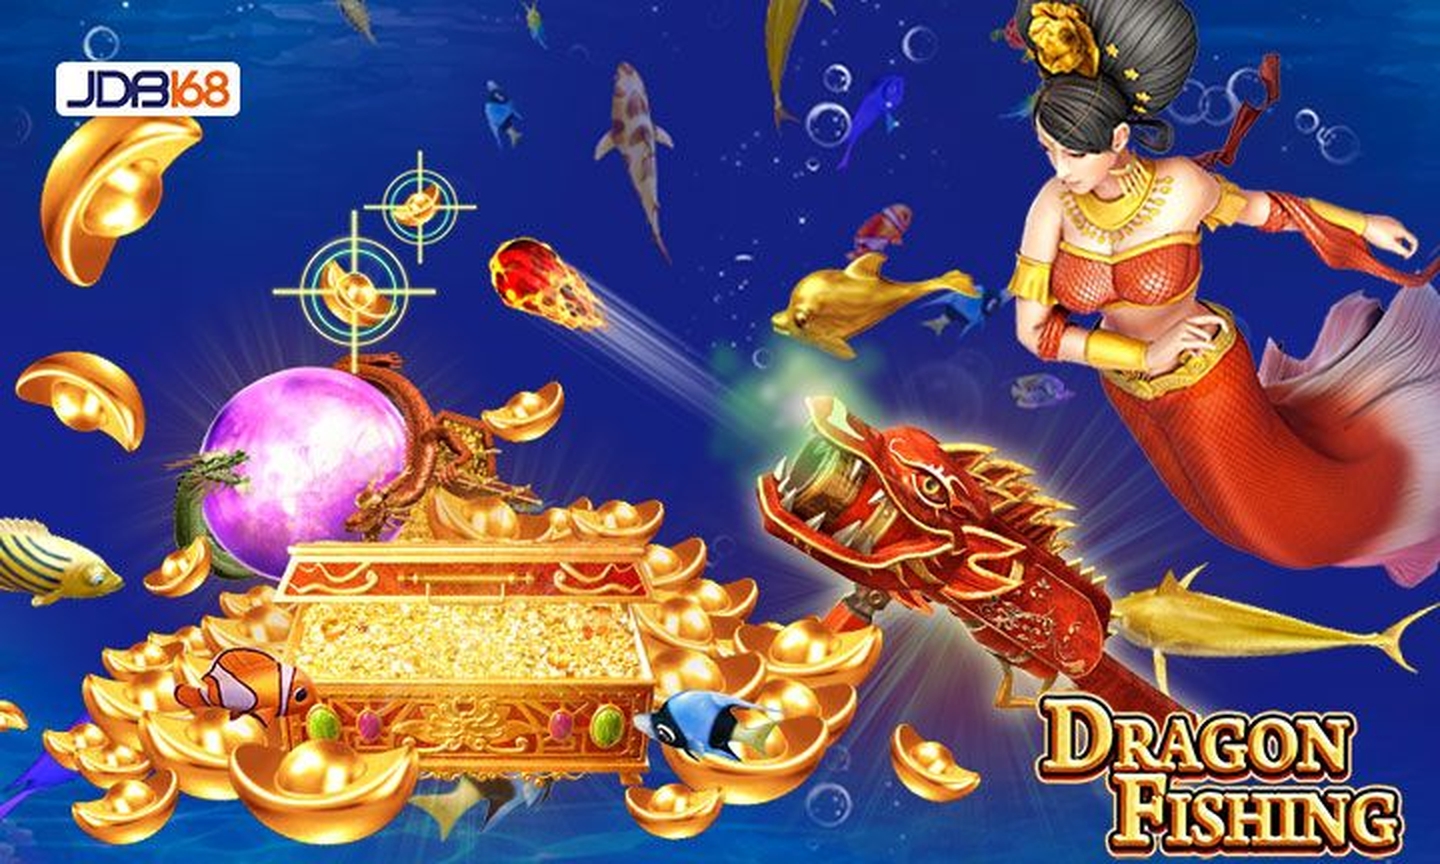 The 5 Dragons Fishing Online Slot Demo Game by JDB168